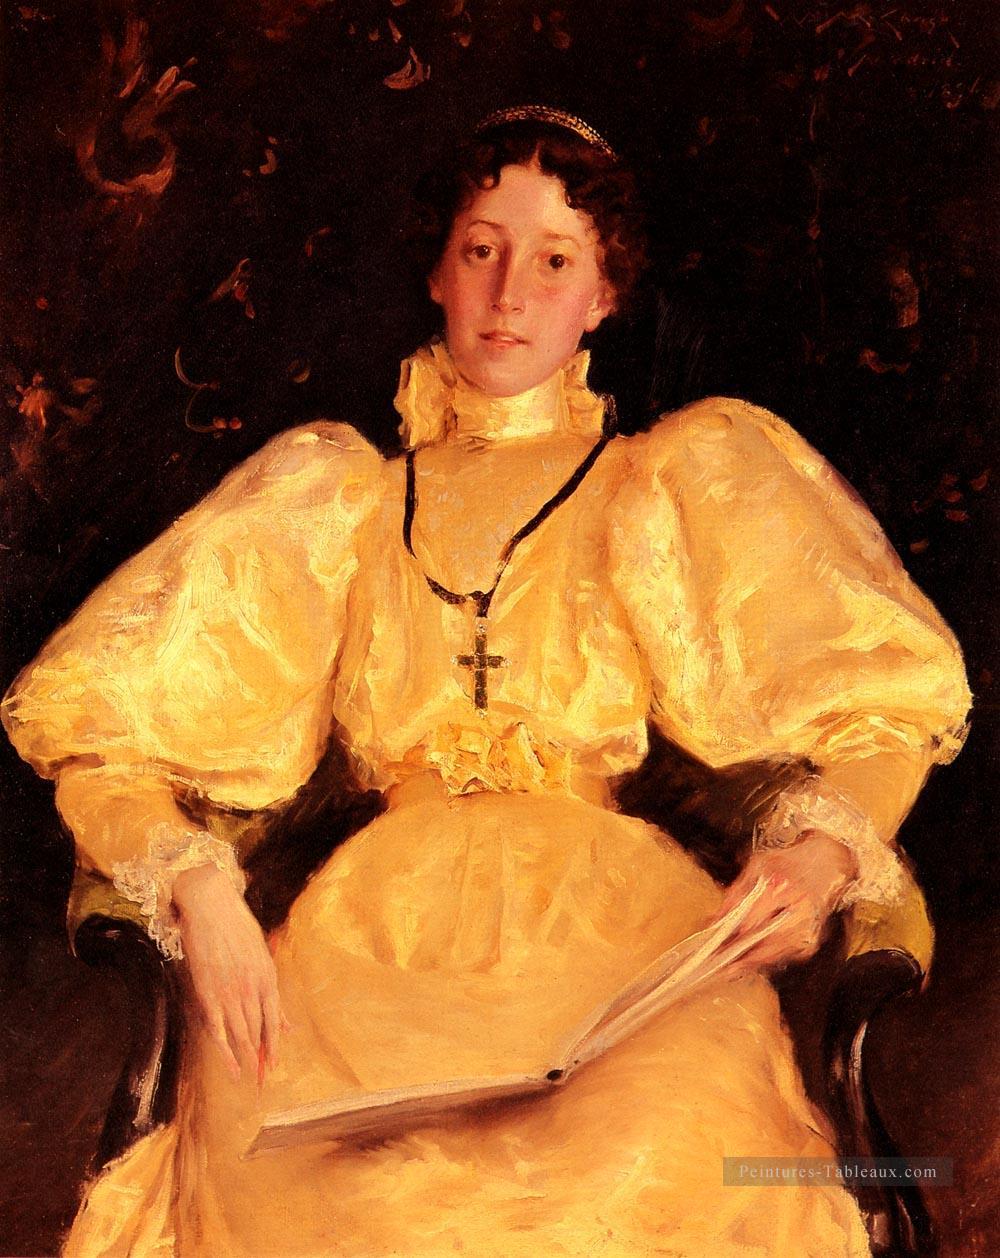 La dame d’or William Merritt Chase Peintures à l'huile